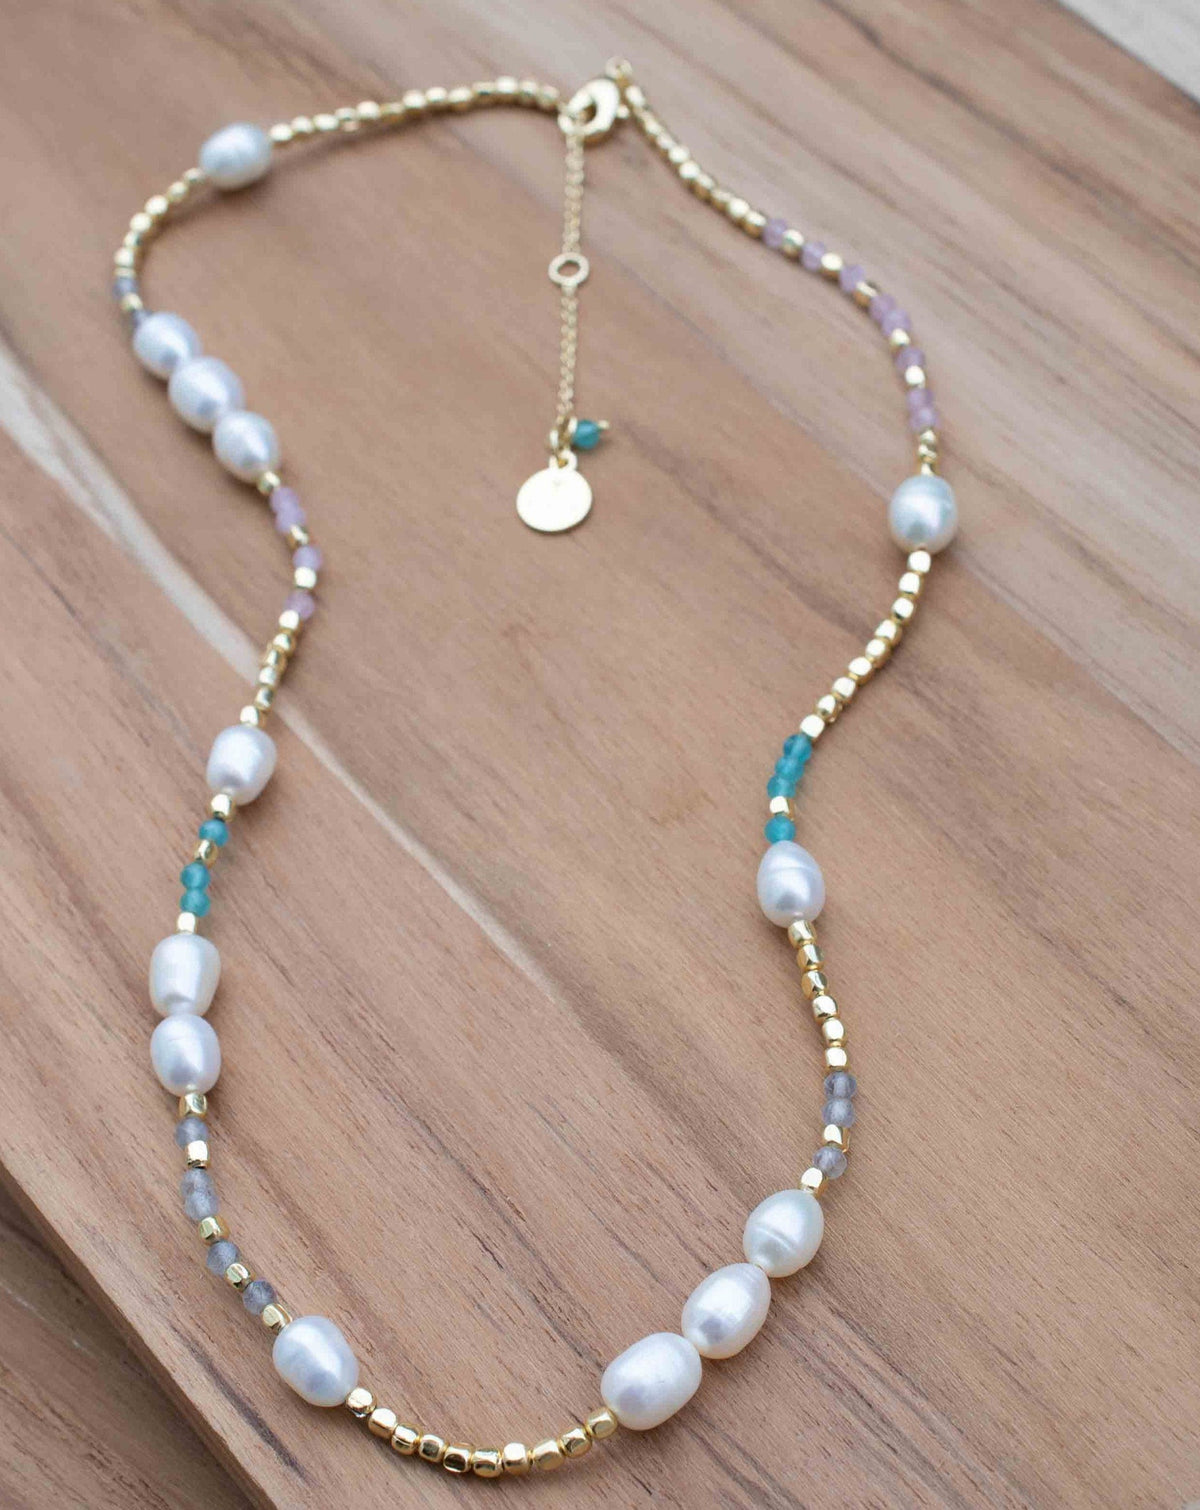 Labradorite, Aqua Chalcedony and Rose Quartz Beads and Pearl Necklace * 18k Gold Plated Beads *Handmade *Layered *Gemstone * Elegant *BJN176